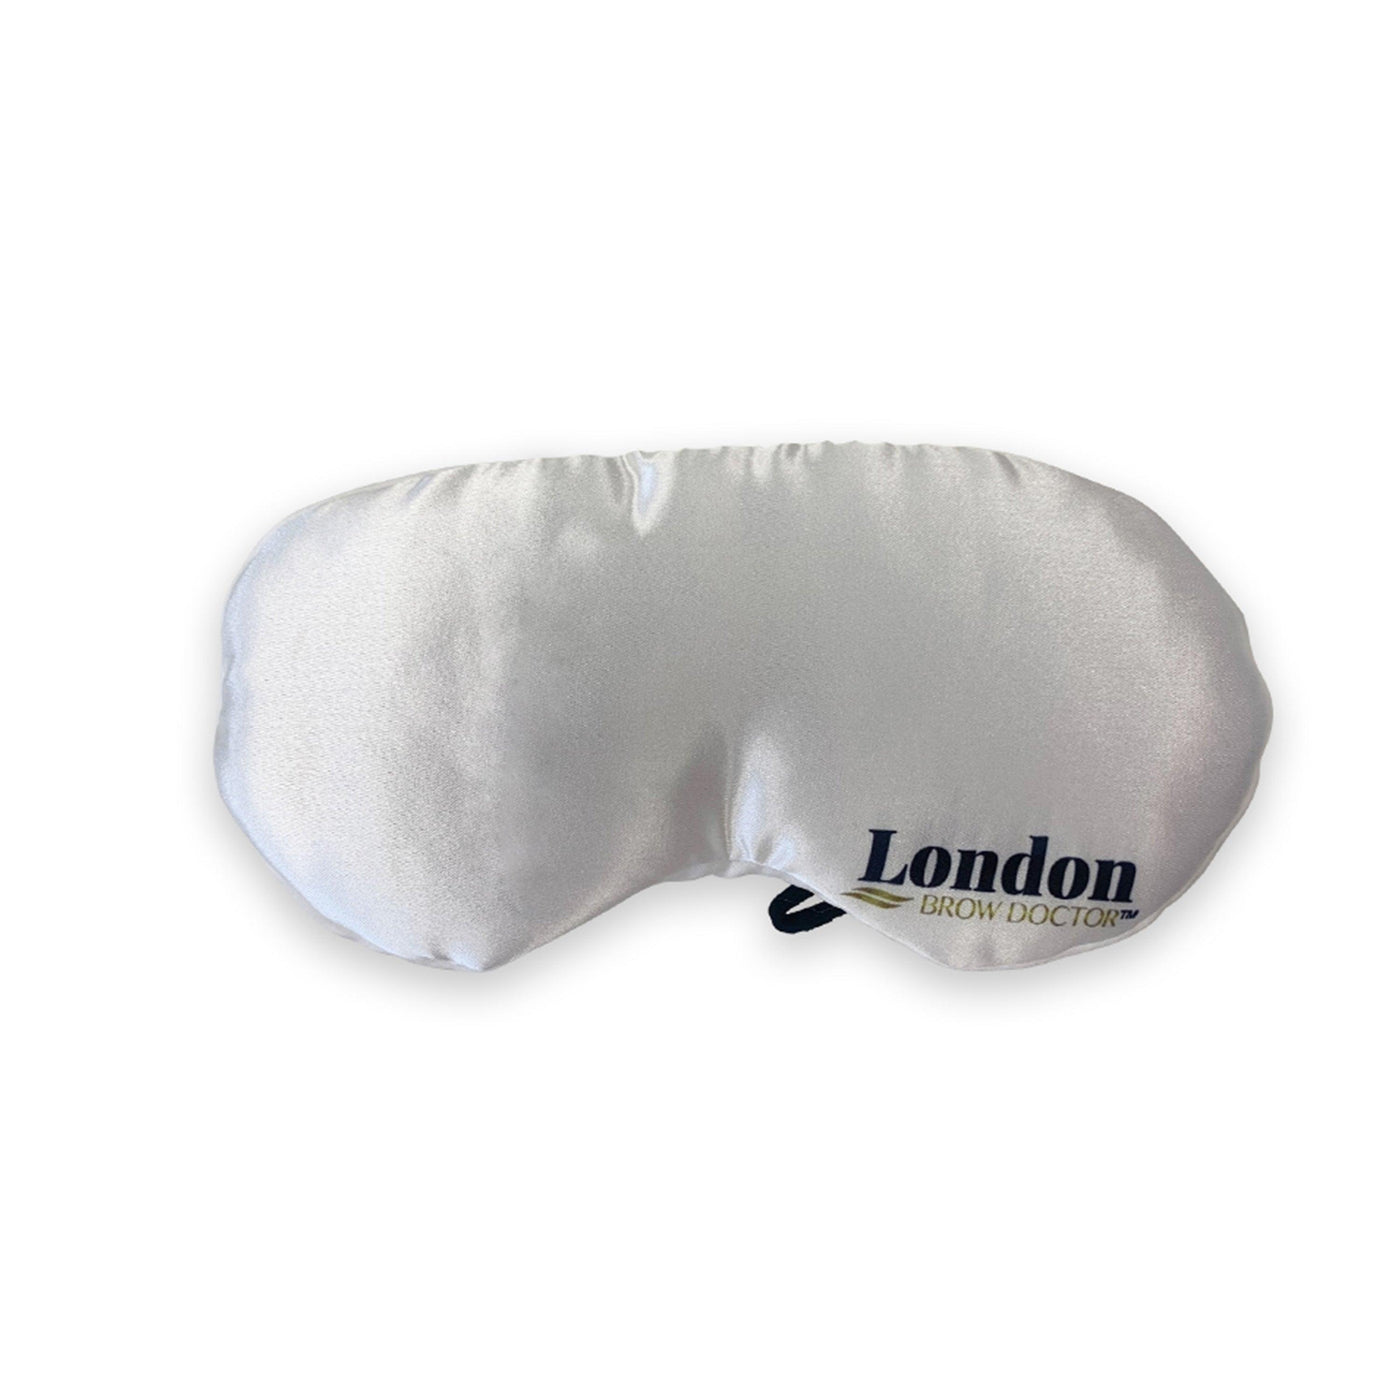 London Brow Doctor Luxury Eye Mask - The London Brow Company